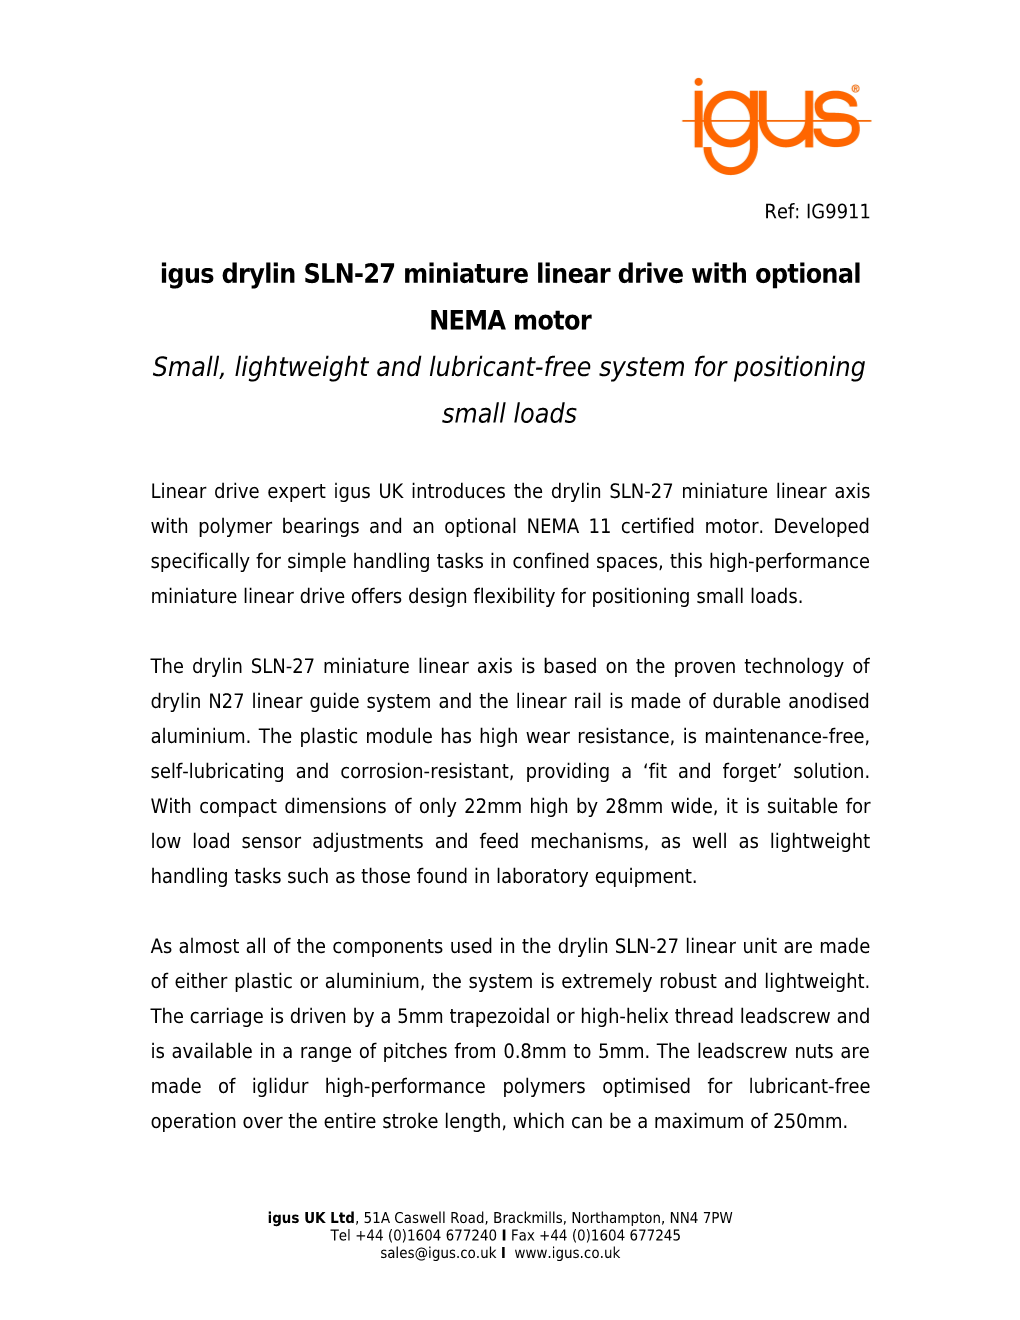 Igus Drylin SLN-27 Miniature Linear Drive with Optional NEMA Motor